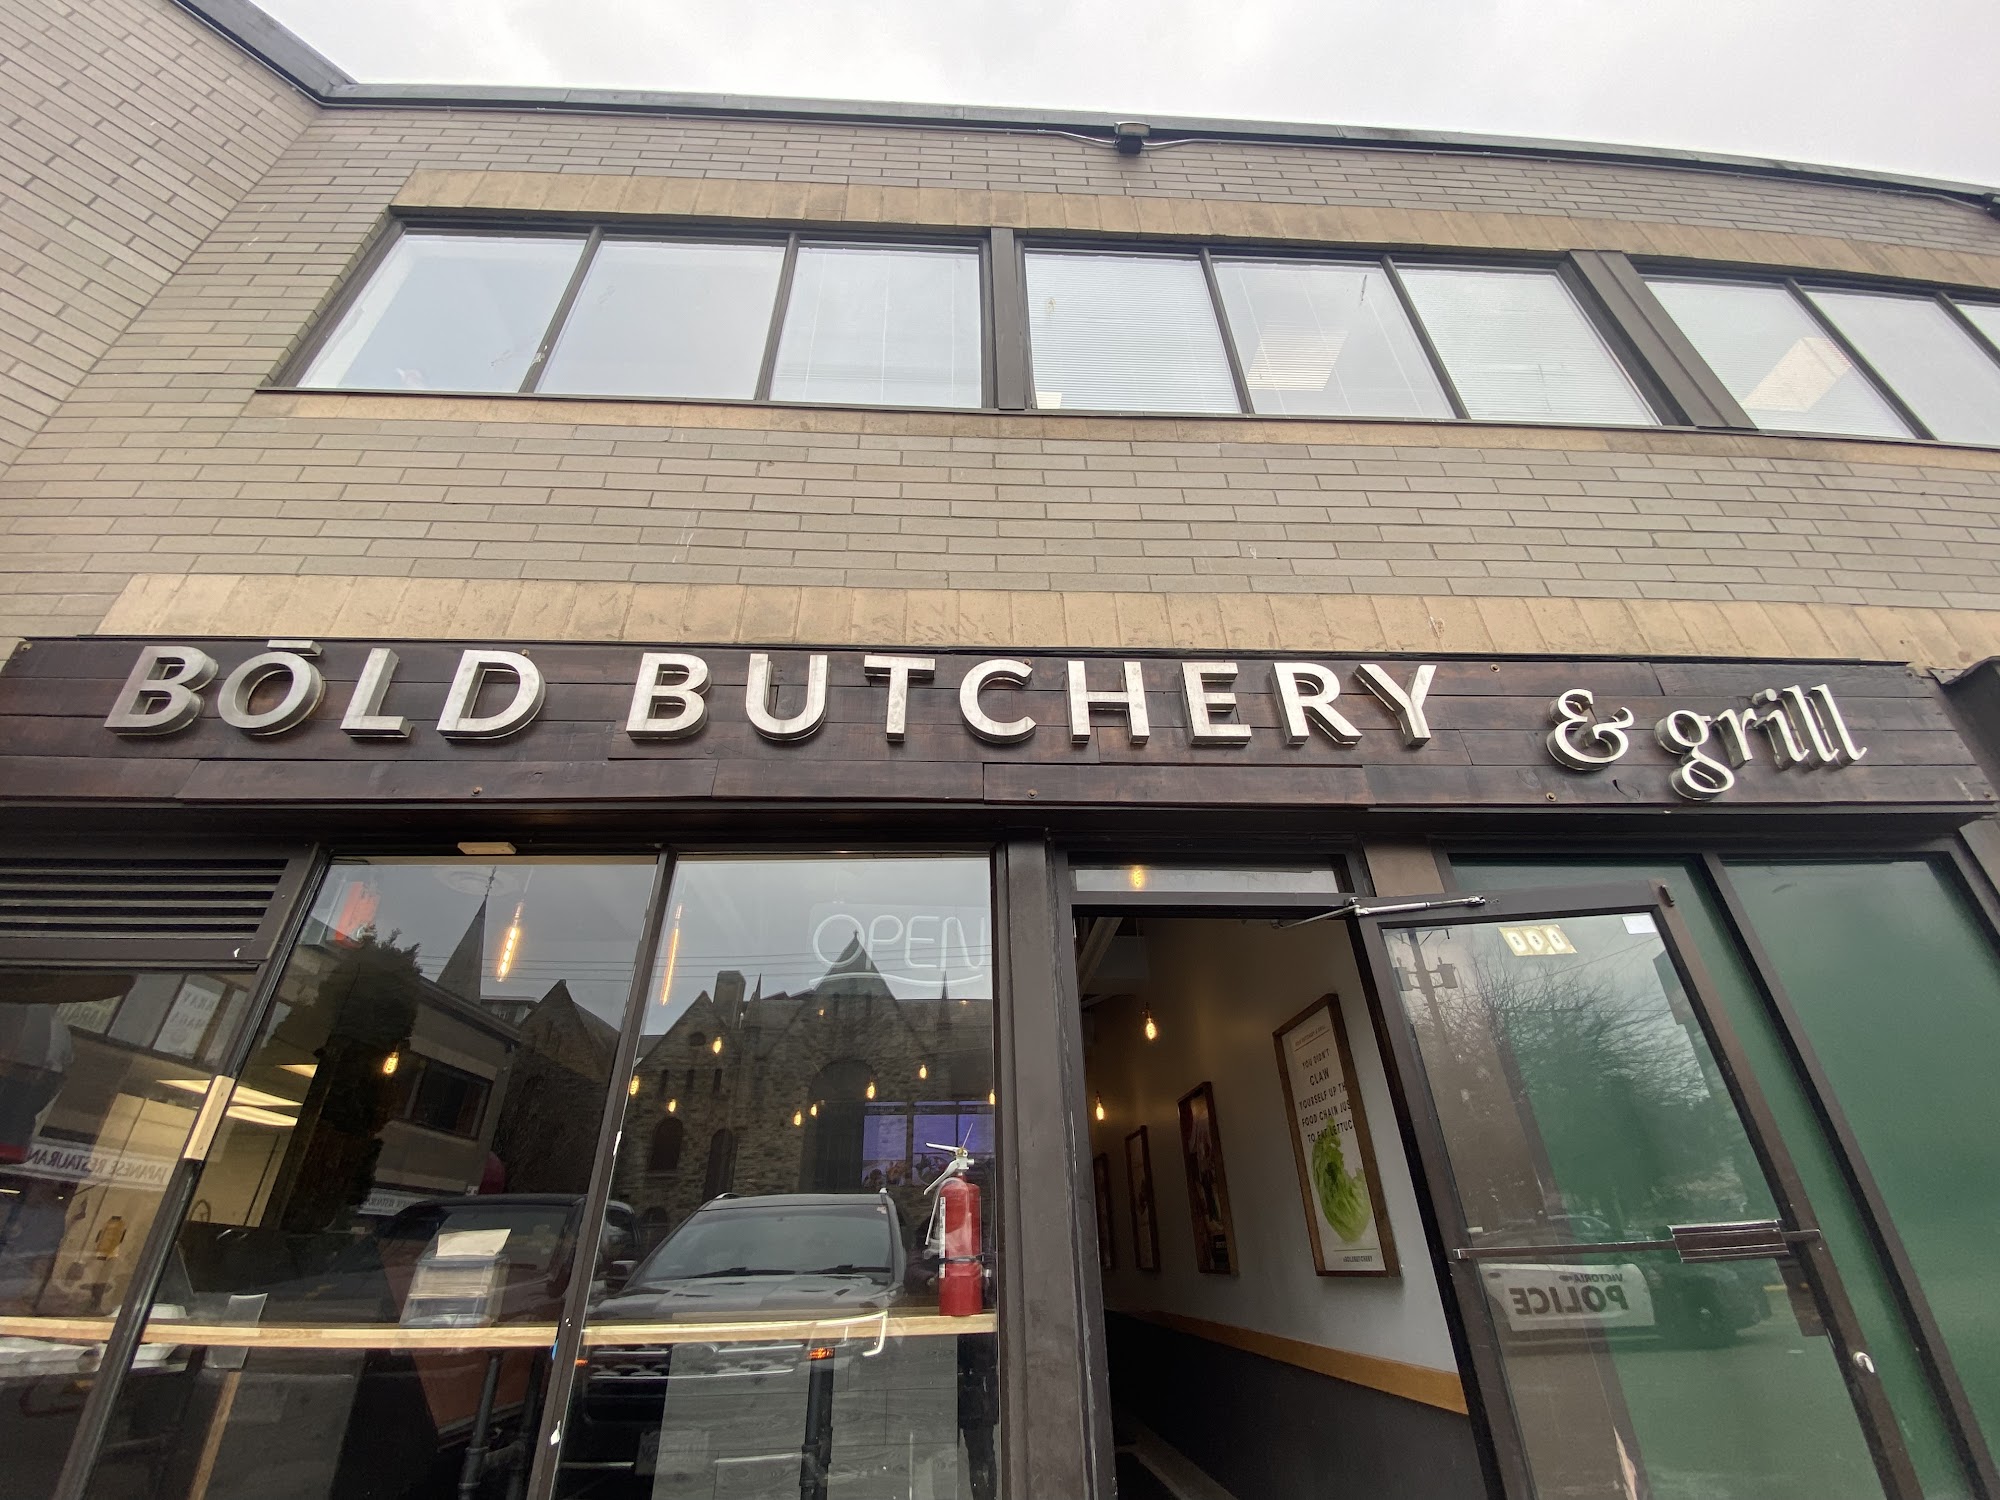 Bold Butchery & Grill